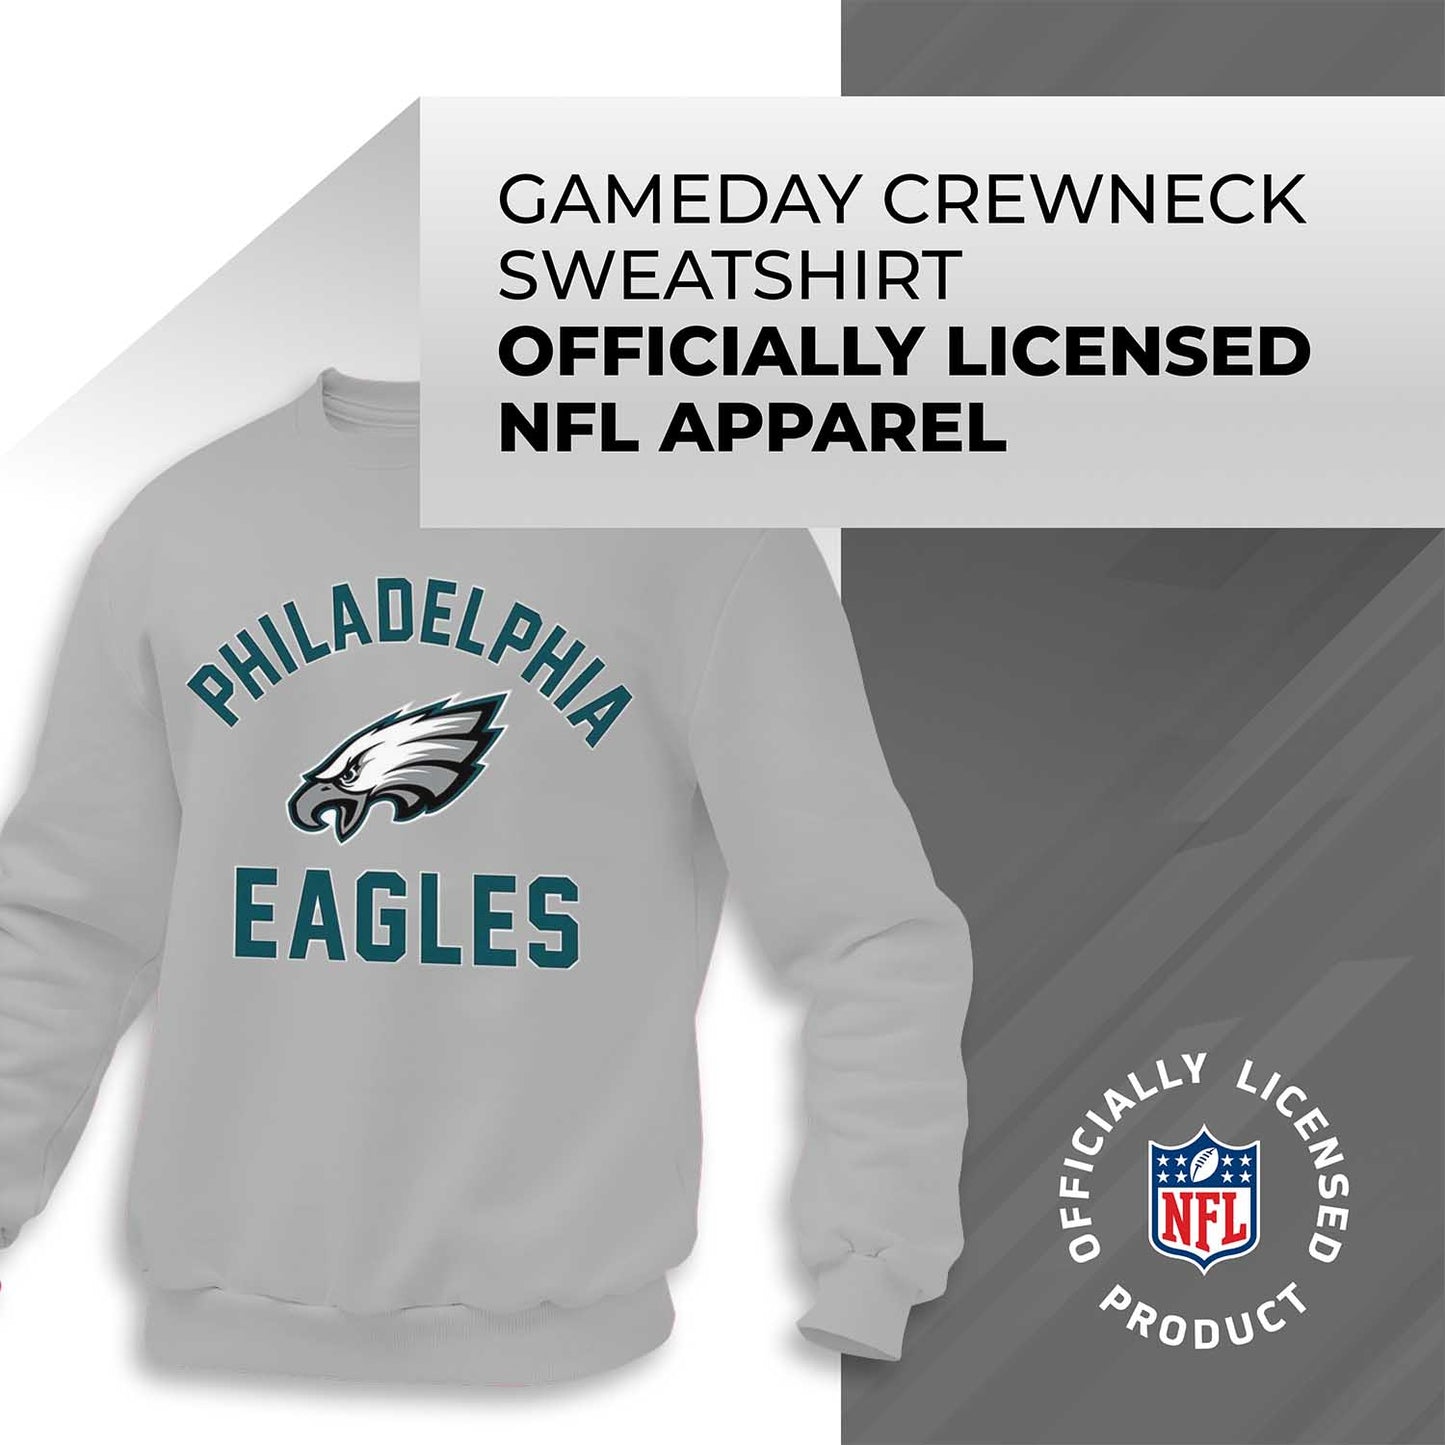 Philadelphia Eagles NFL Adult Gameday Football Crewneck Sweatshirt - Gray